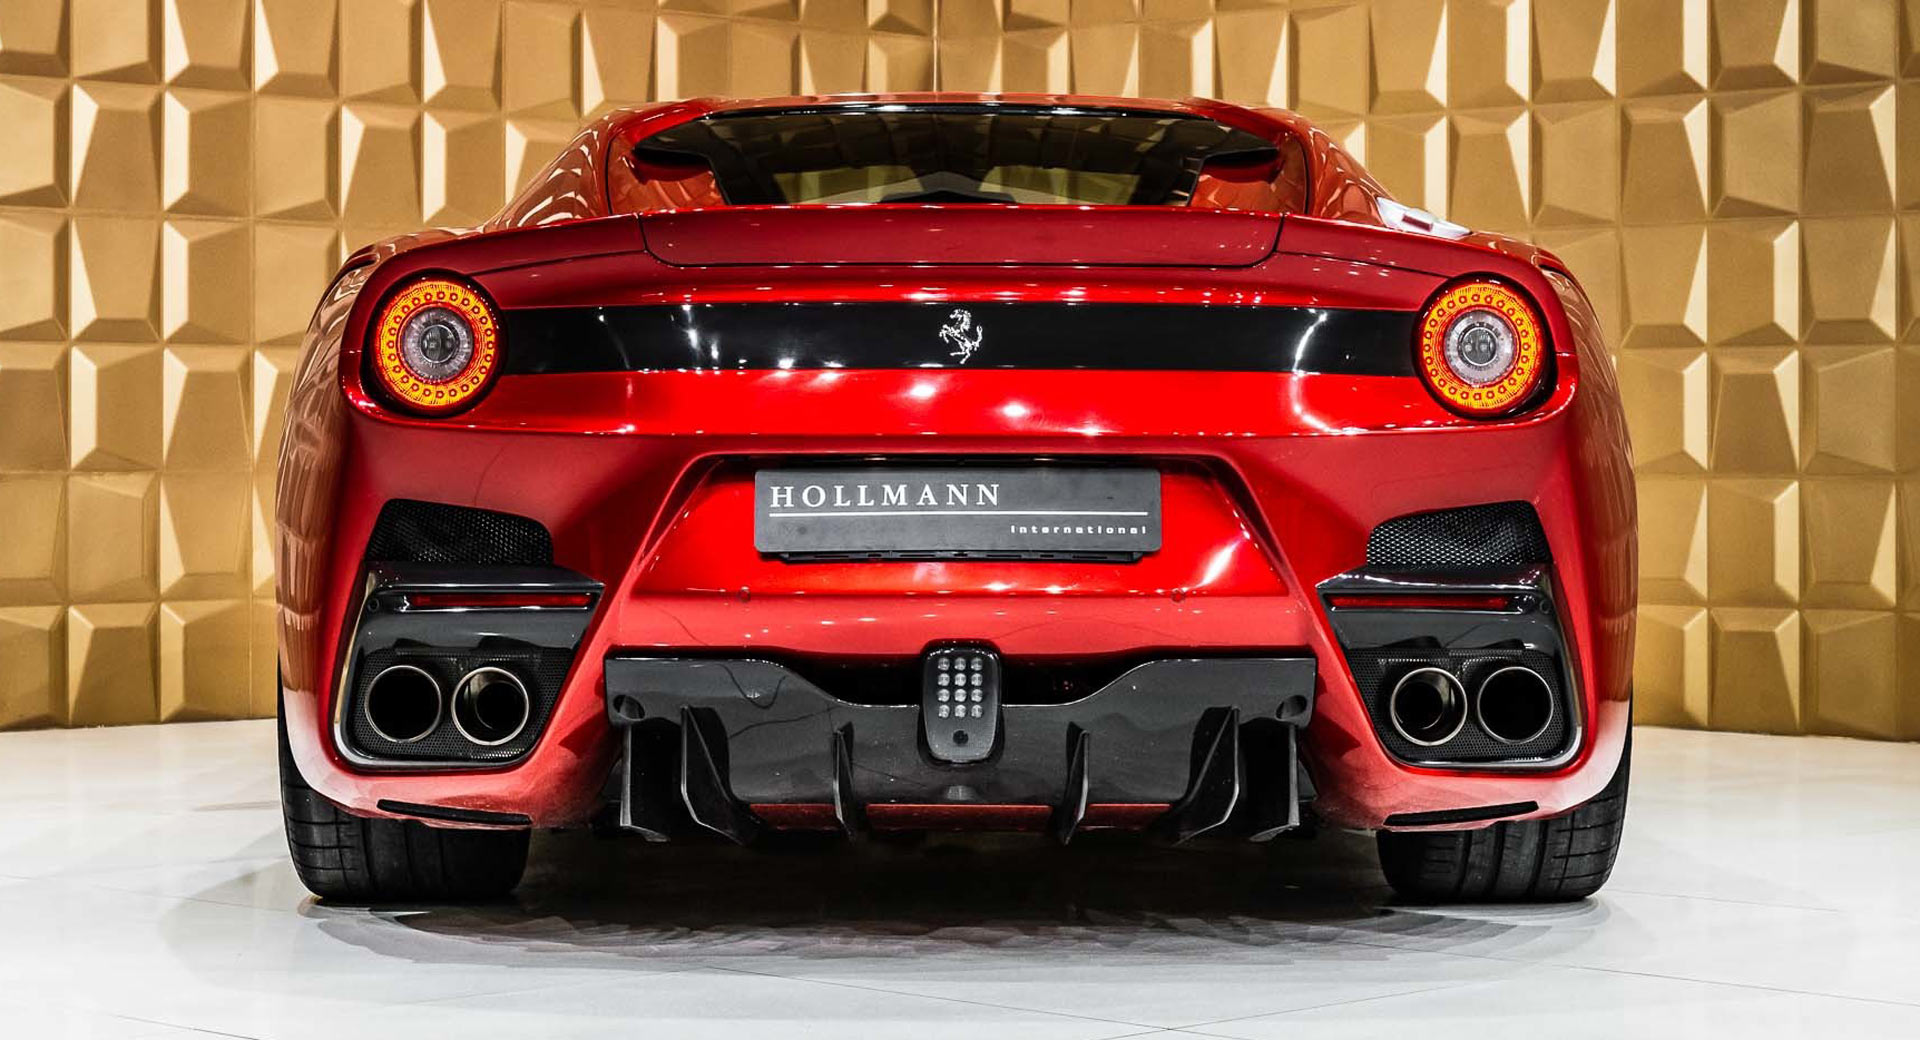 This Ferrari F12tdf Is 900 000 Worth Of Italian Sex Appeal